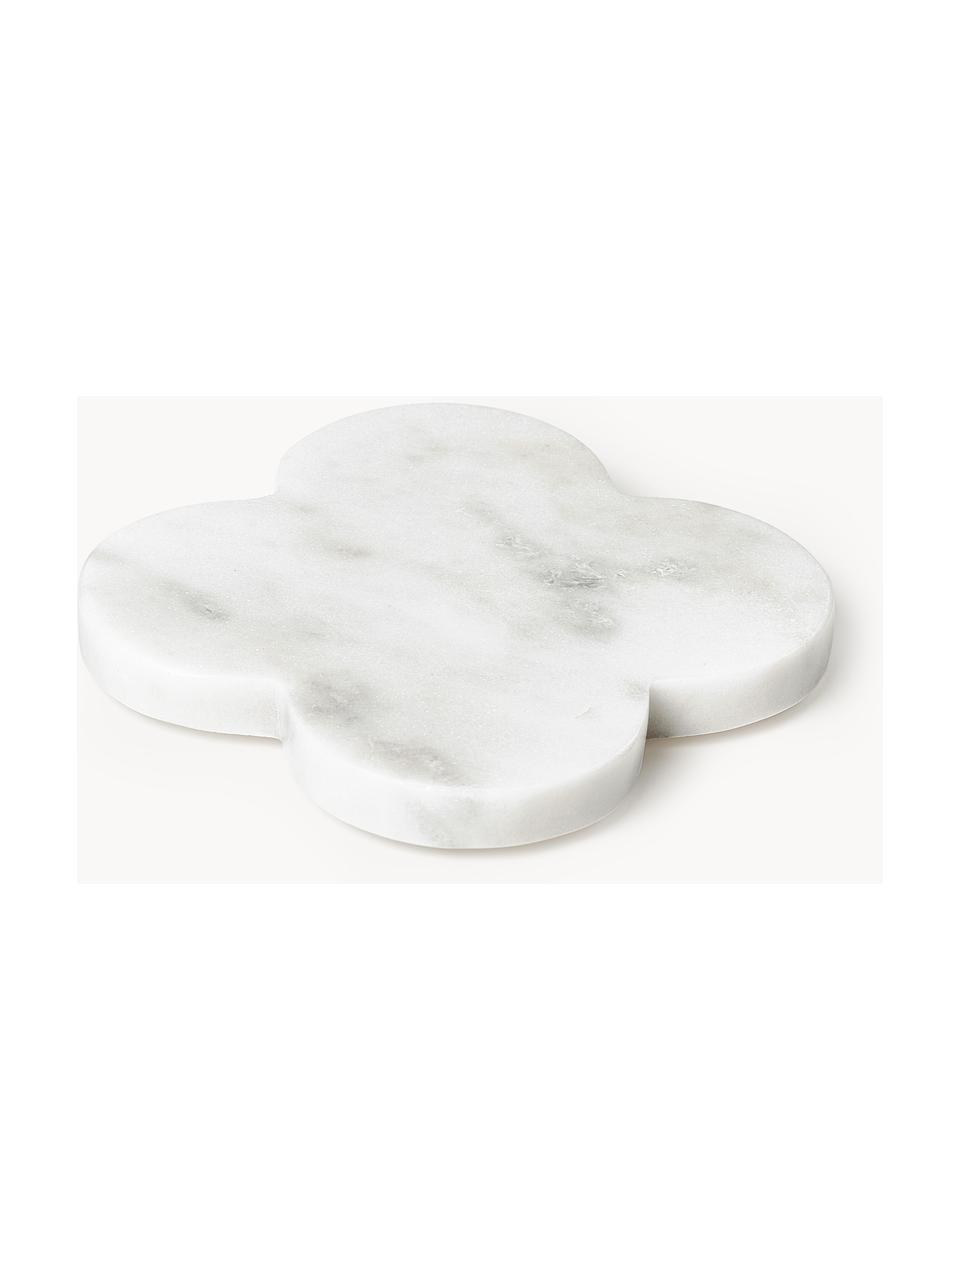 Sottobicchieri in marmo Teo 4 pz, Marmo, Bianco marmorizzato, Larg. 10 x Prof. 10 cm